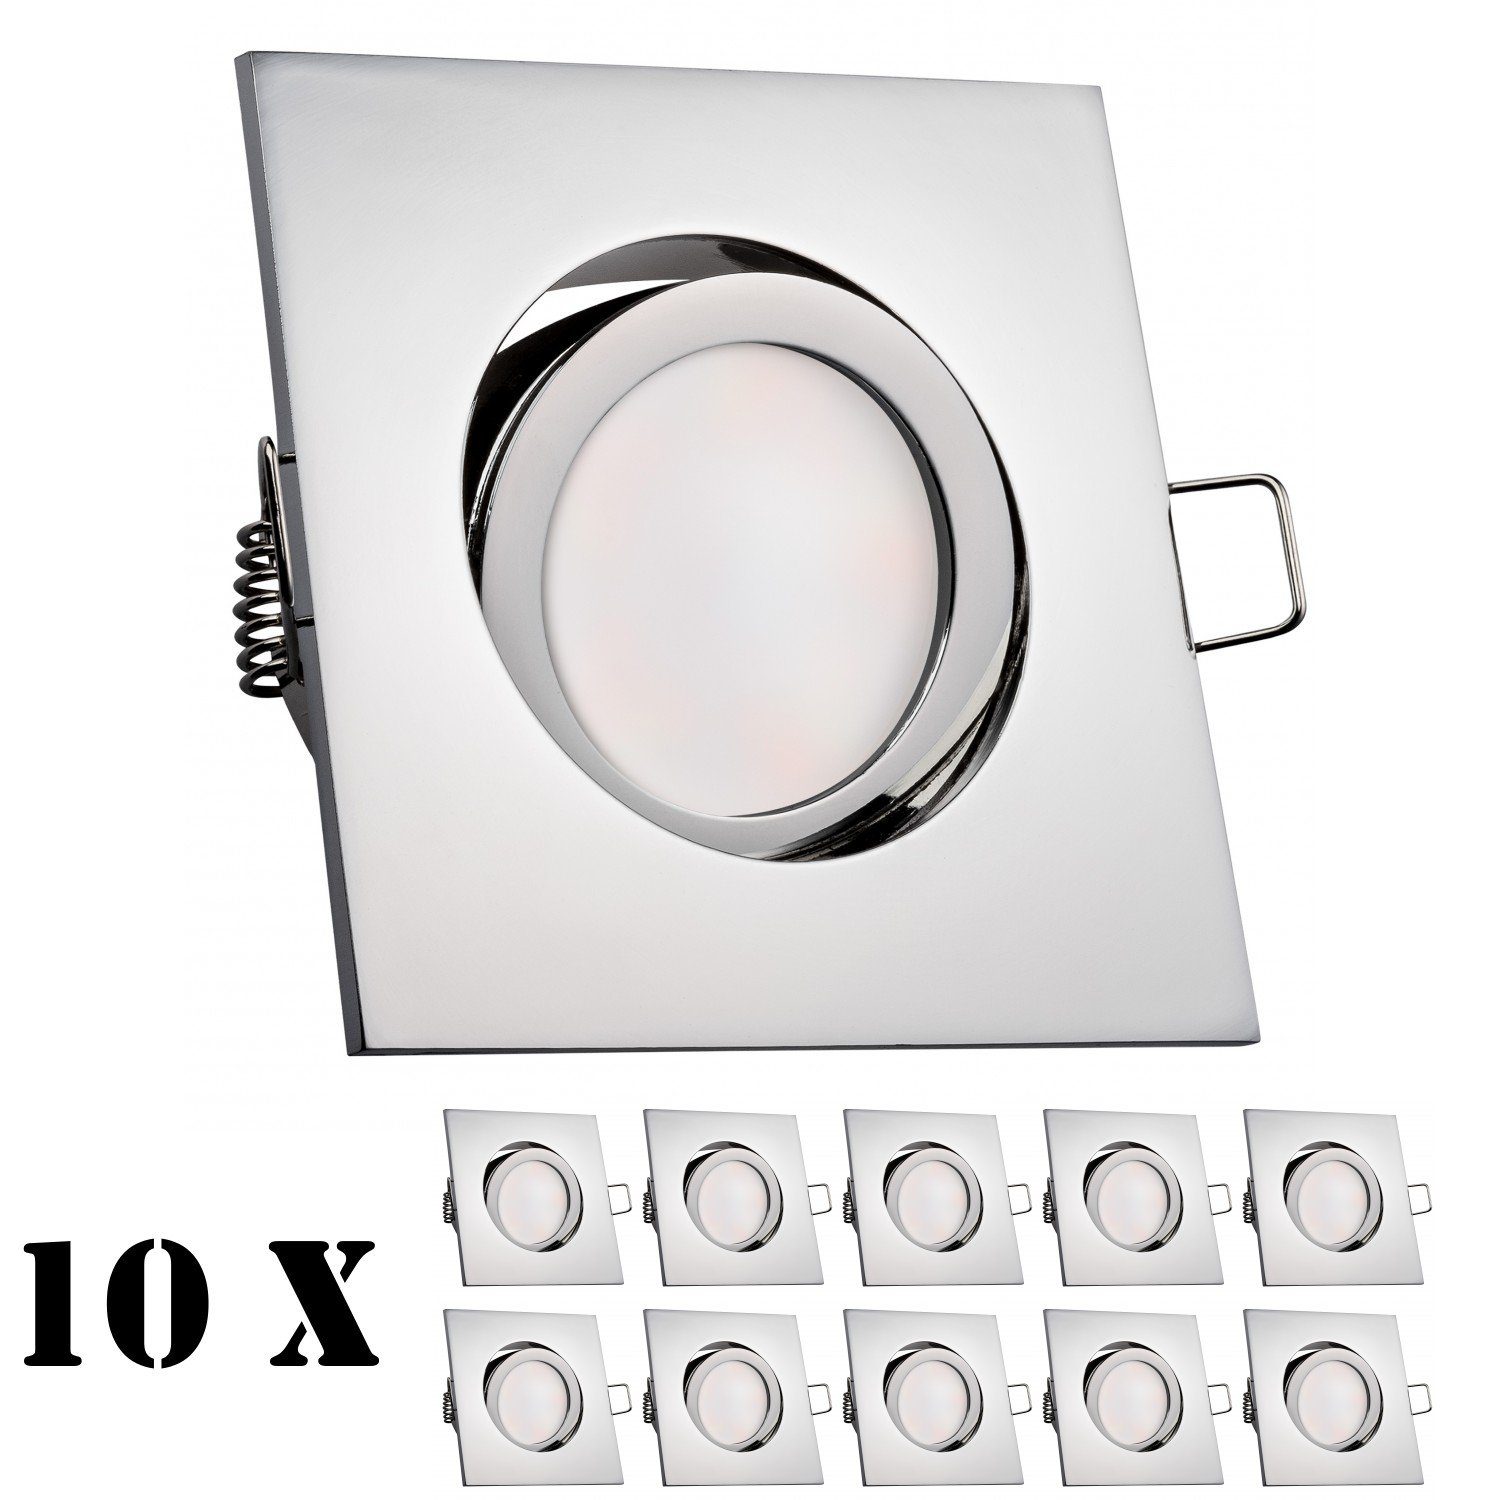 mit 5W Einbaustrahler in 10er Leuchtmittel extra Set v flach LED LED LEDANDO chrom Einbaustrahler